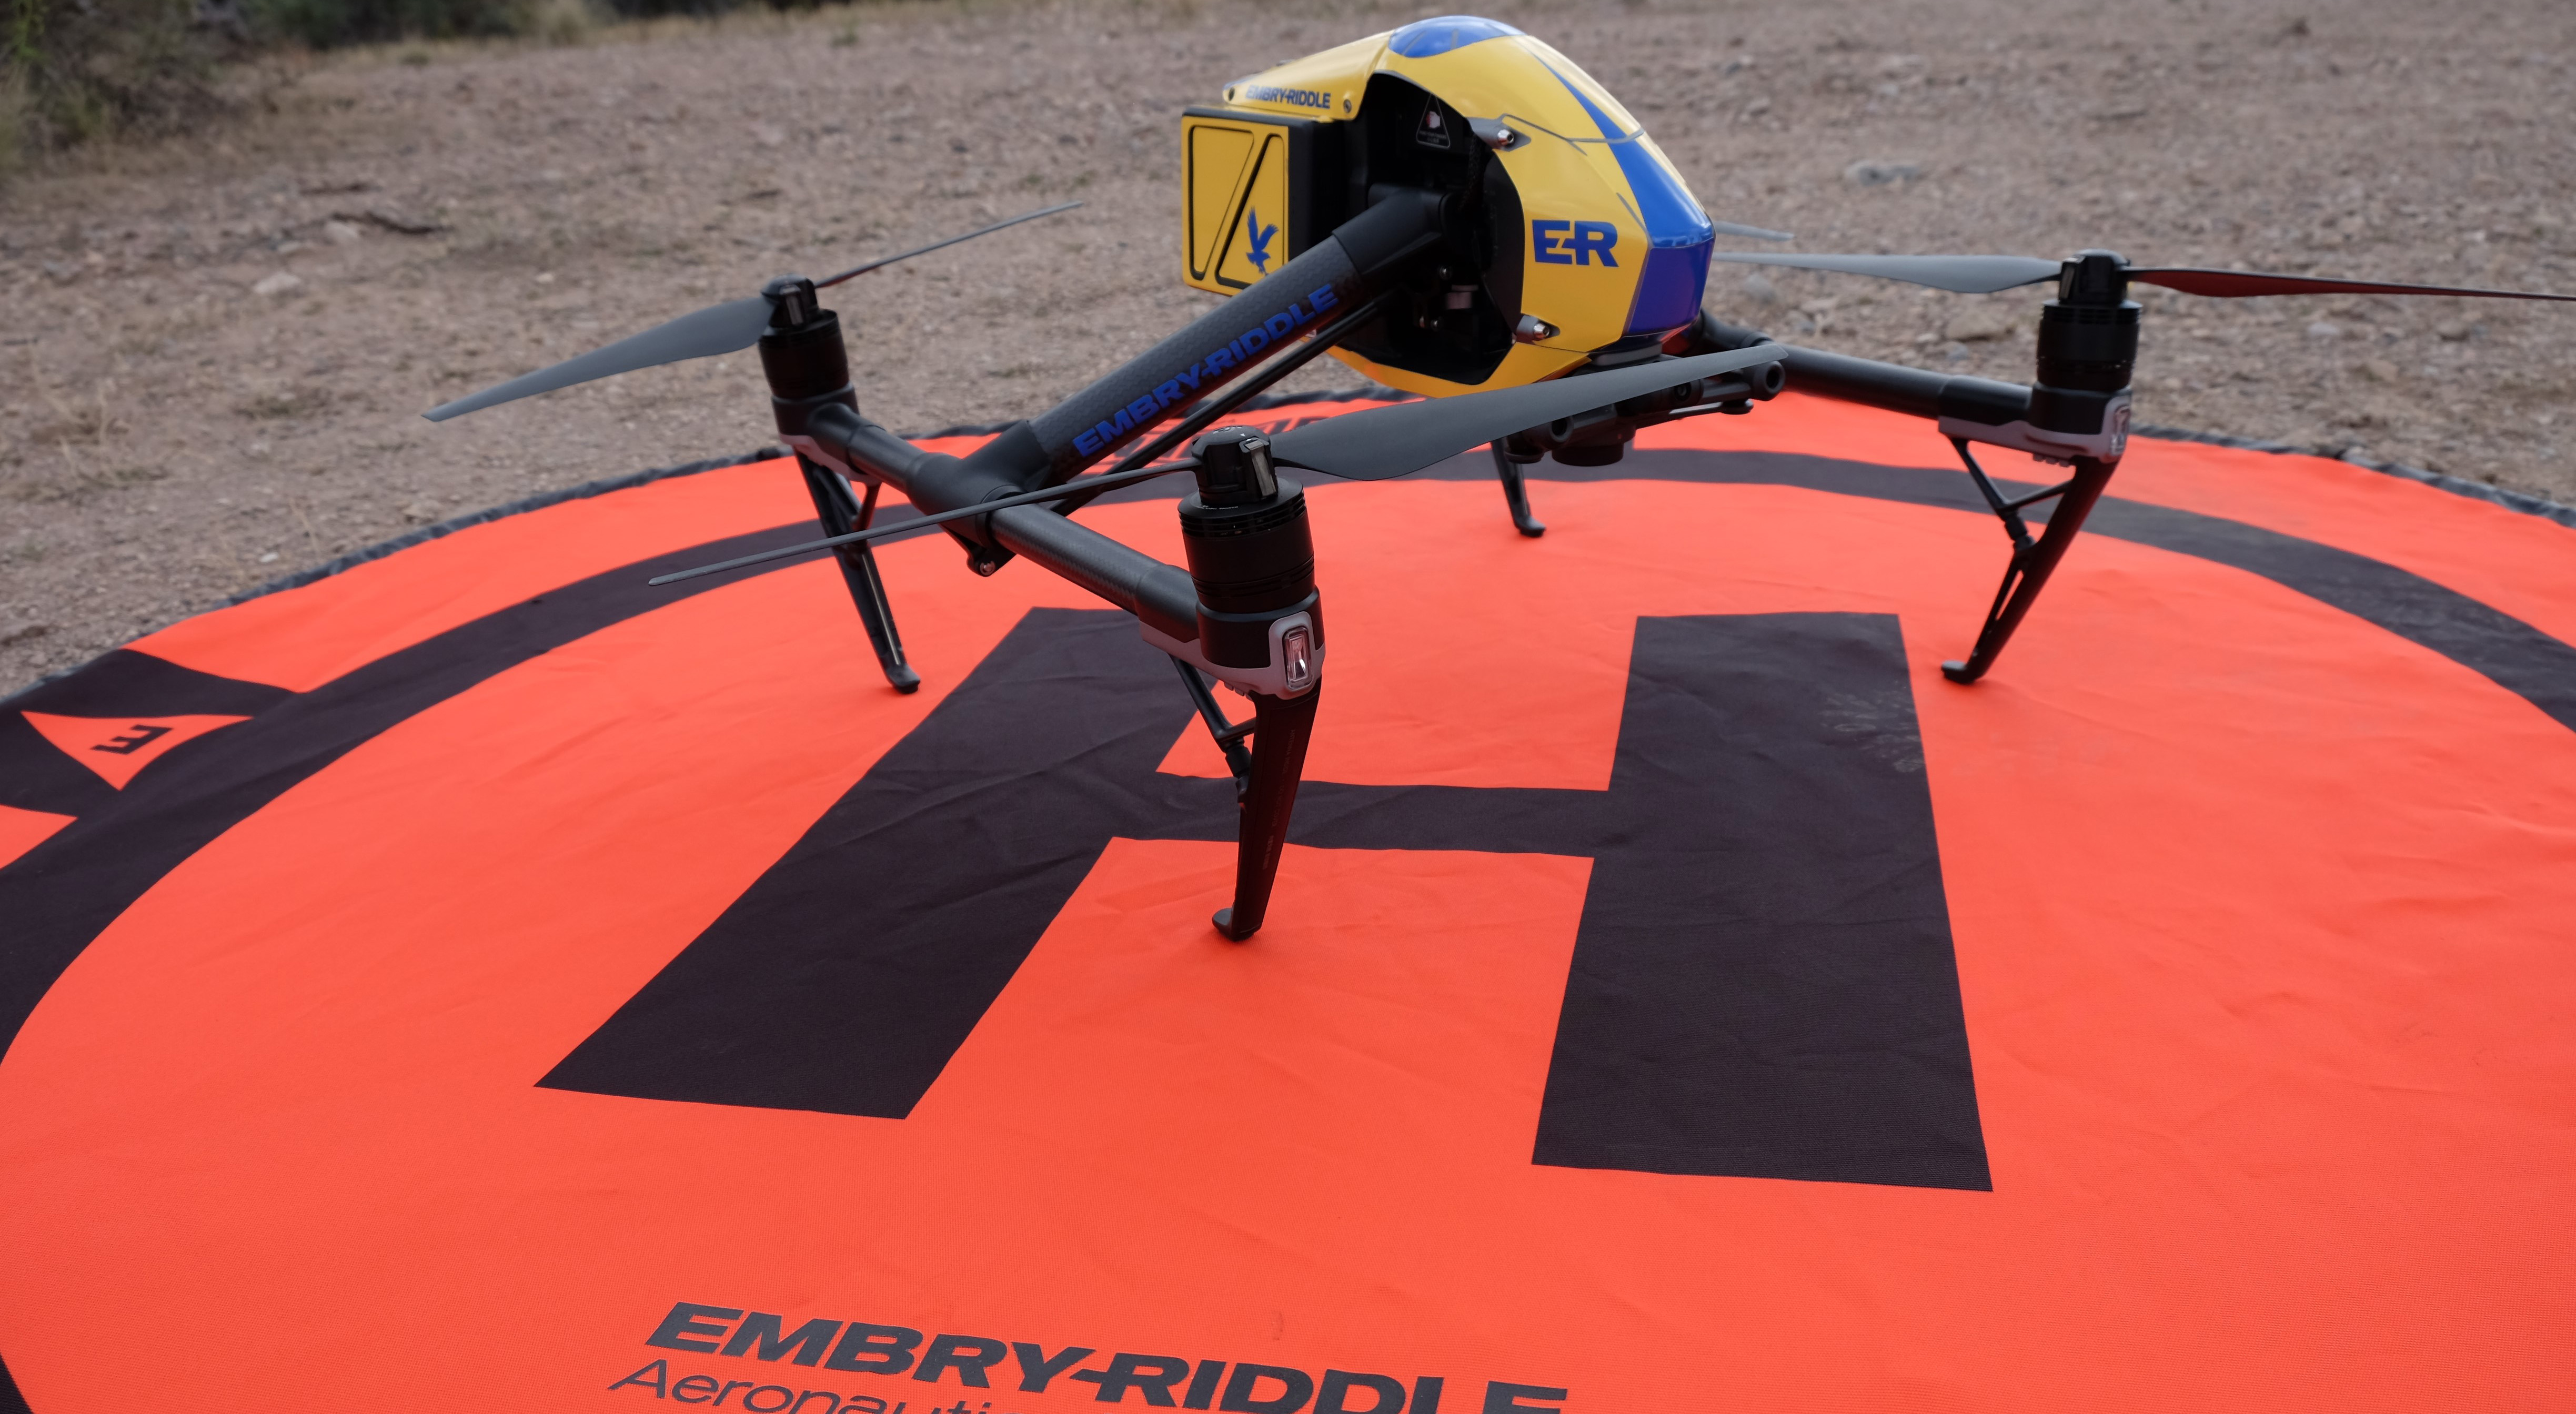 a quadrotor drone sits on a landing pad